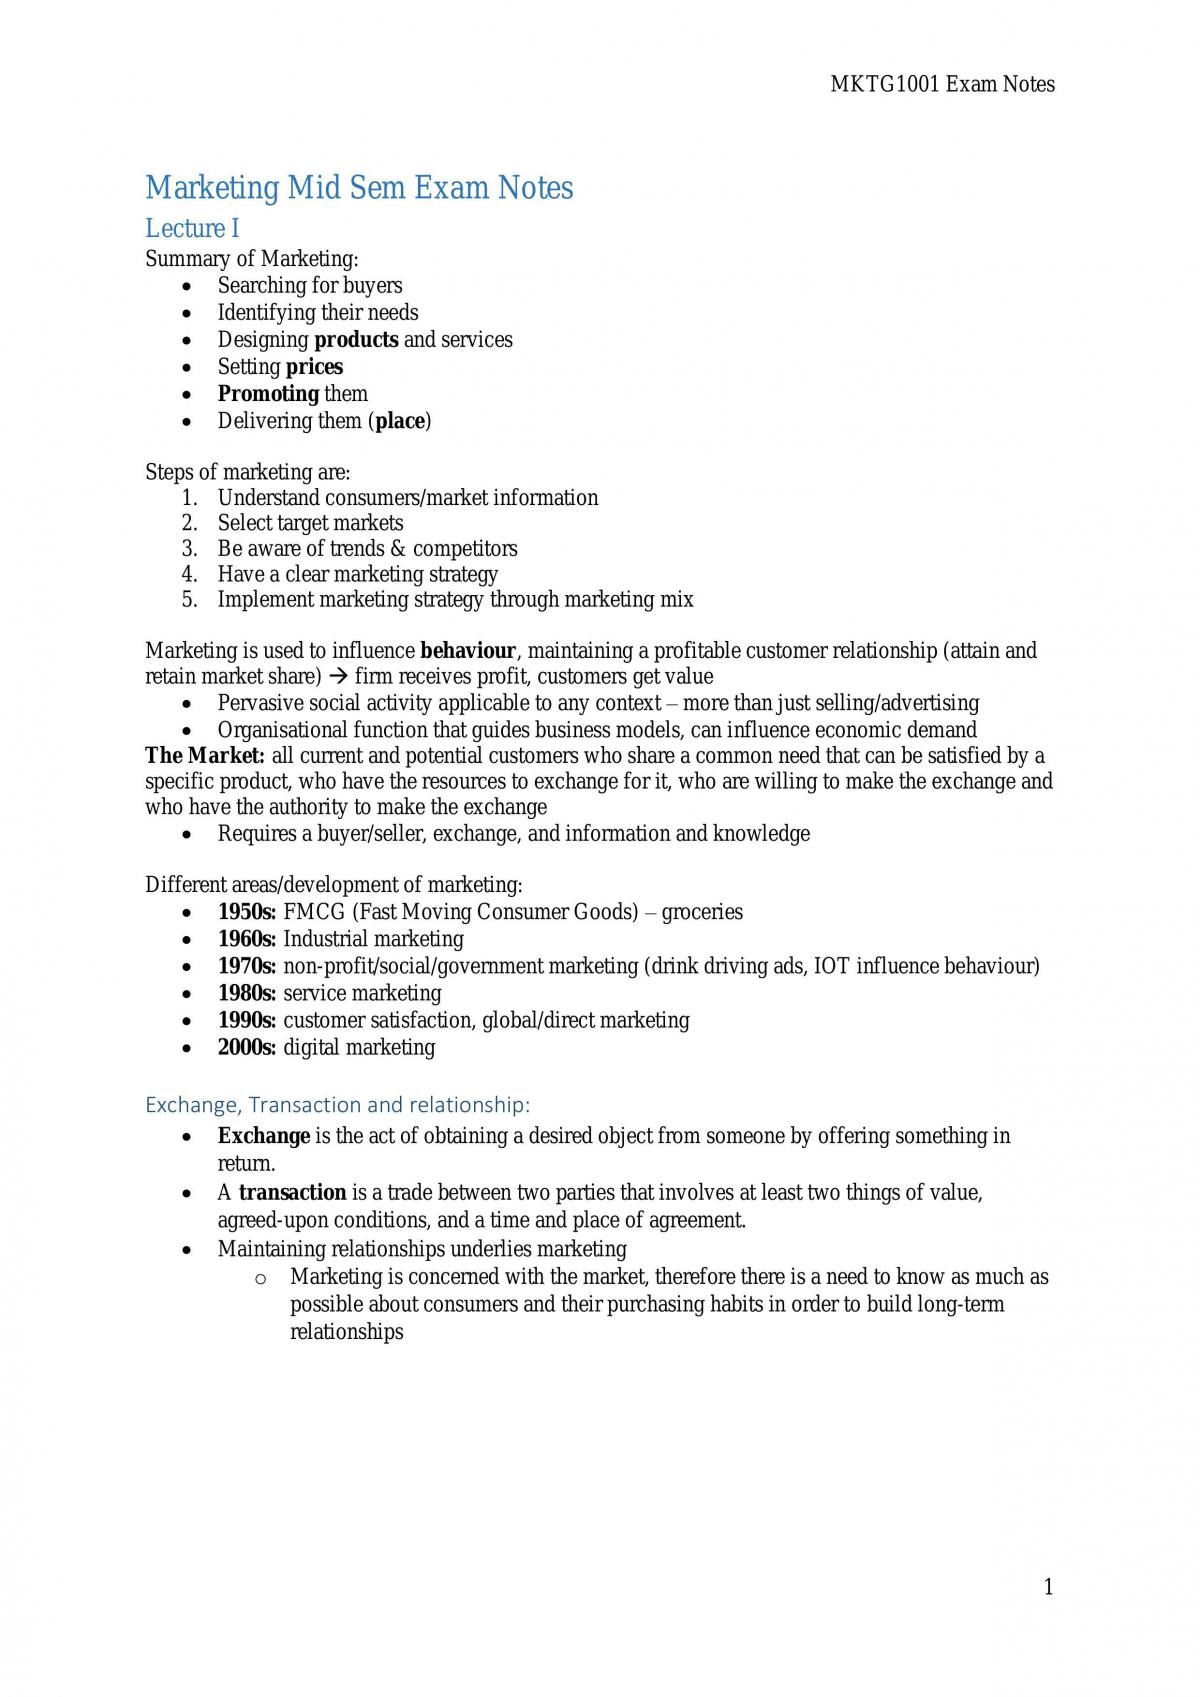 MKTG1001 Final Semester Notes - Page 1